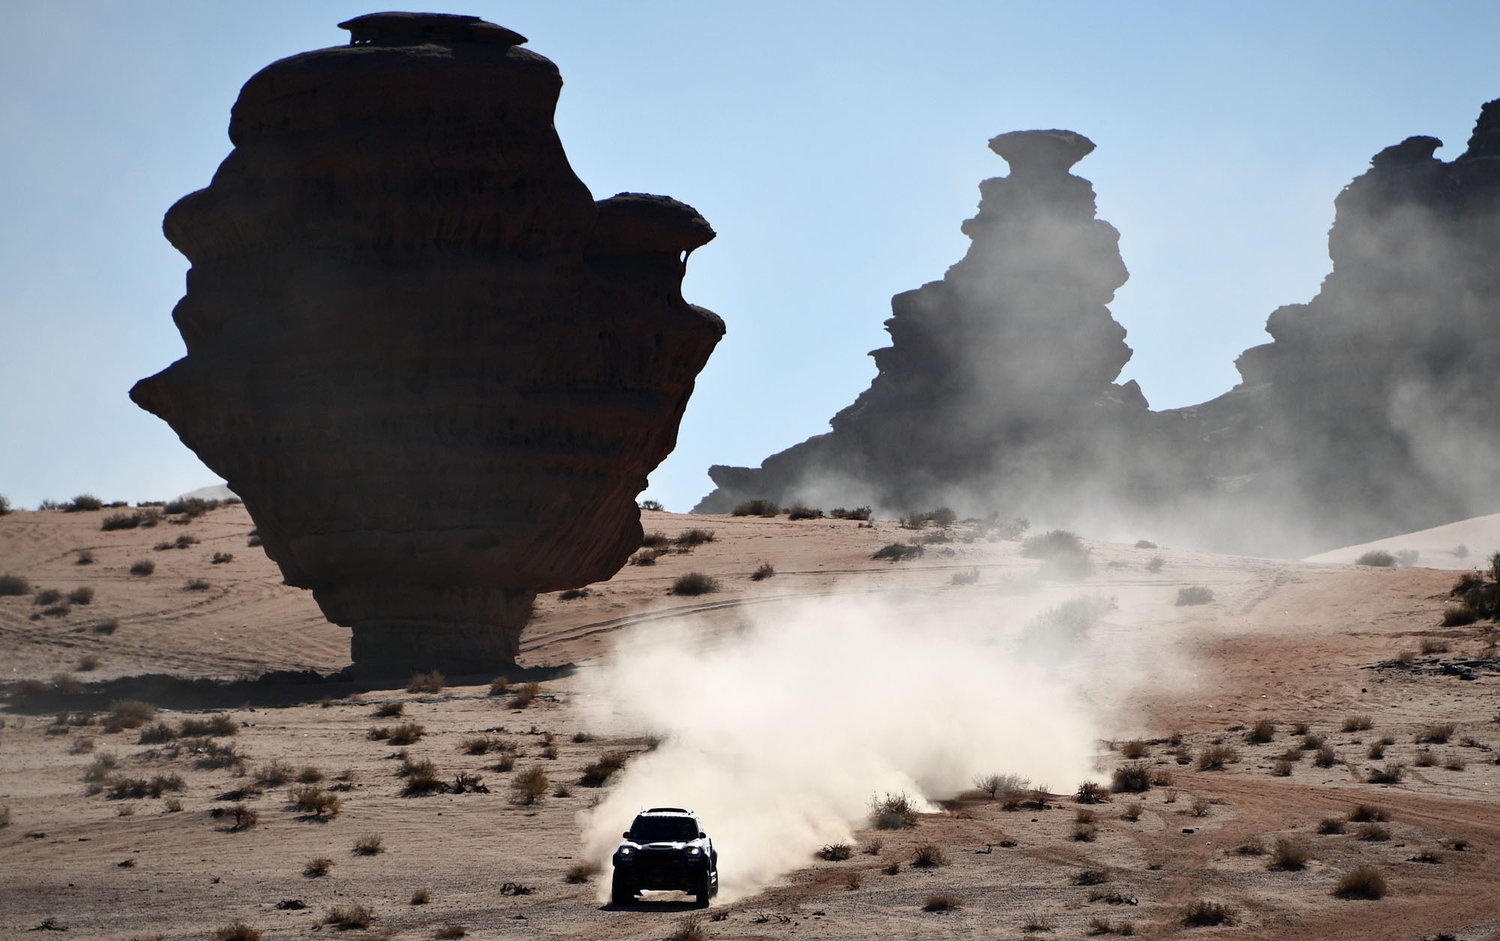 Mini's Argentinian drivers Orlando Terranova and co-driver Bernardo Grue compete during Stage 3 of the 2020 Dakar Rally in Saudi Arabia.